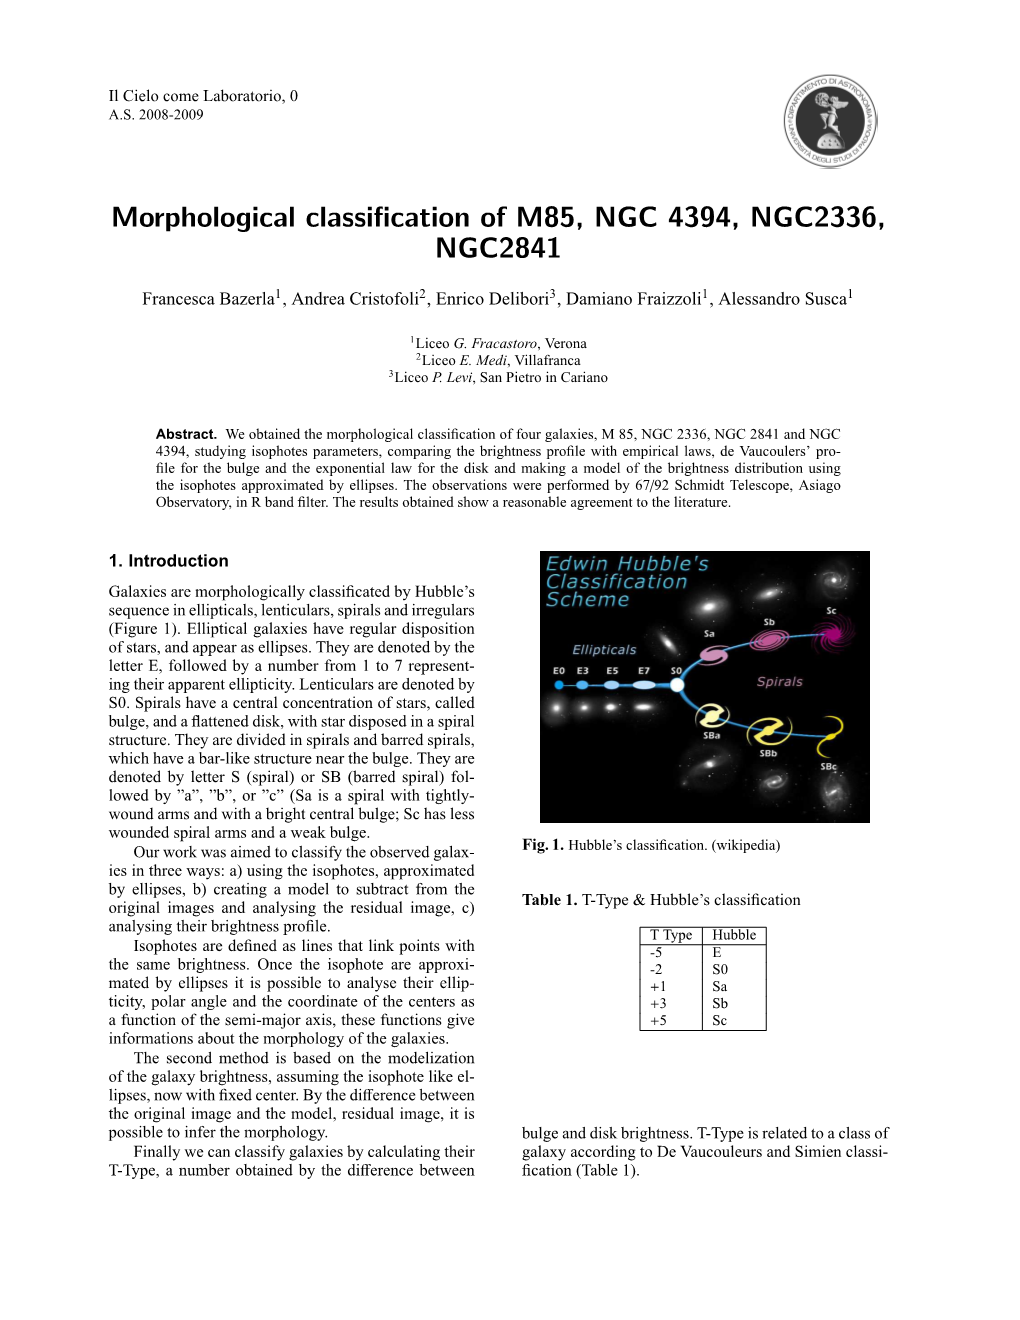 Morphological Classification of M85, NGC 4394, NGC2336, NGC2841